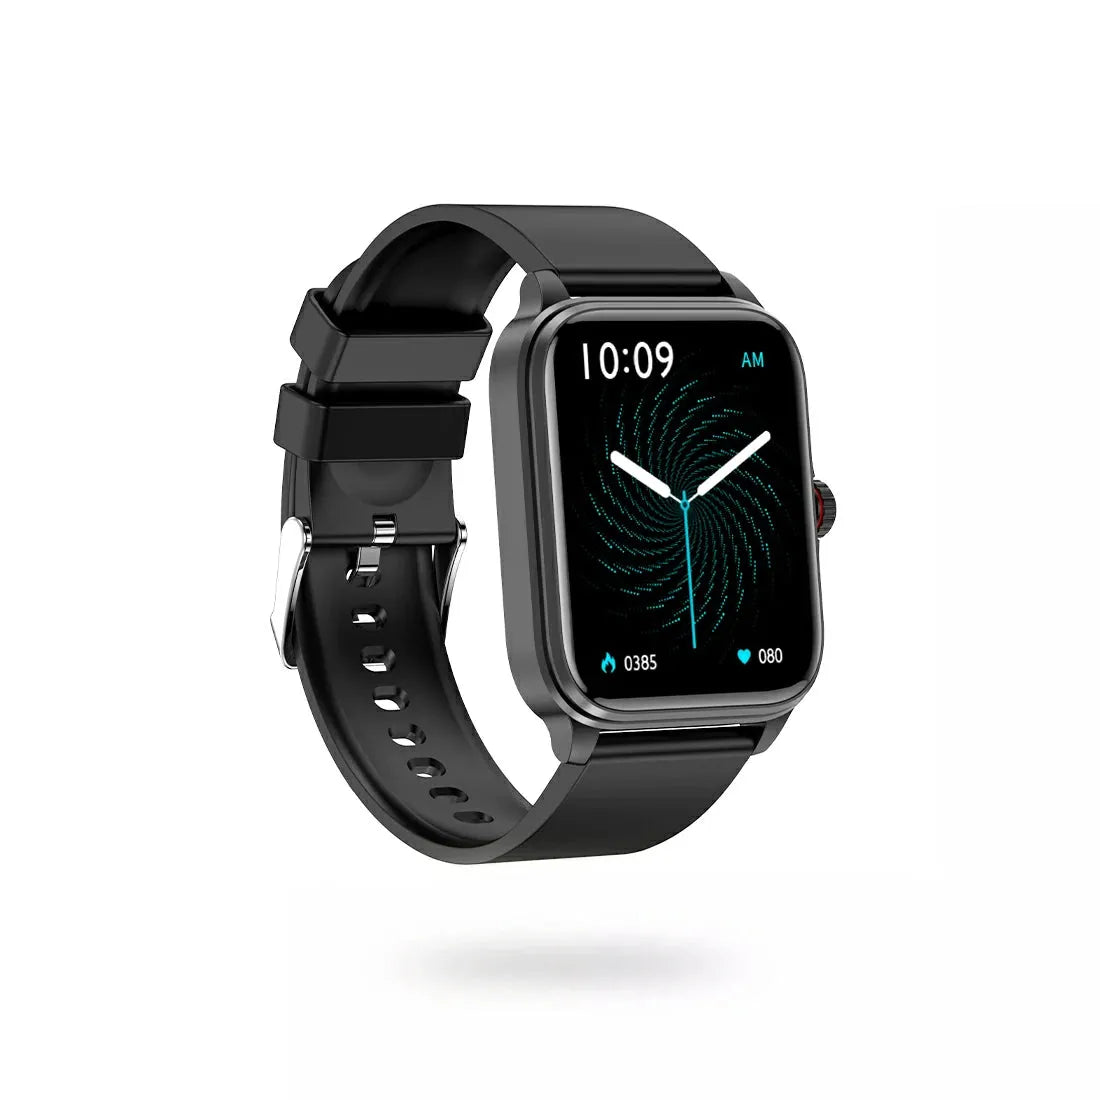 Tousains smartwatch P1 in black